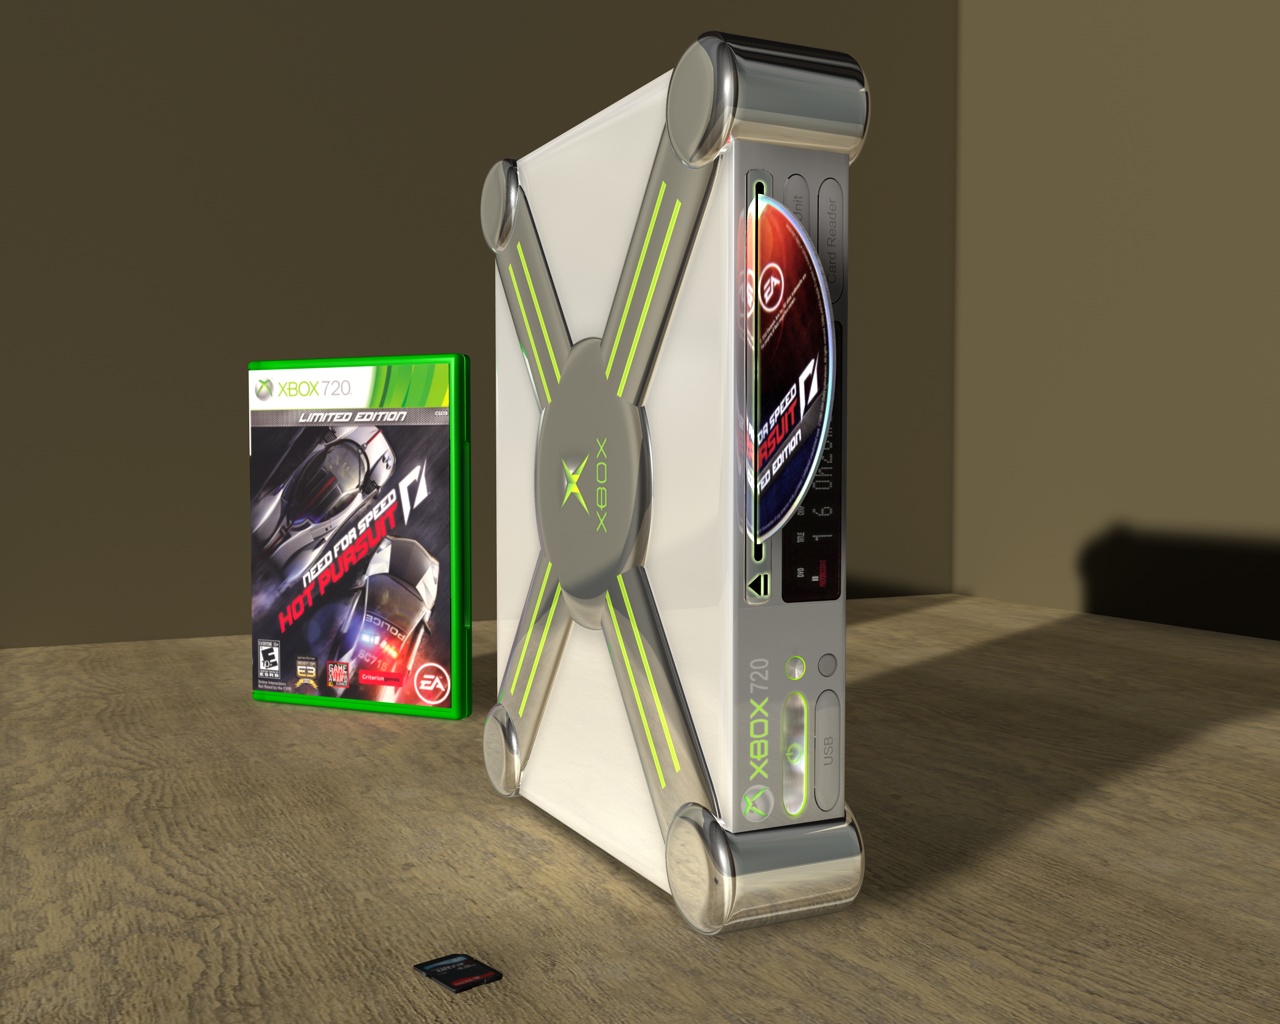 hamer Ga lekker liggen puppy Xbox 720 Concept by Vandarque on DeviantArt